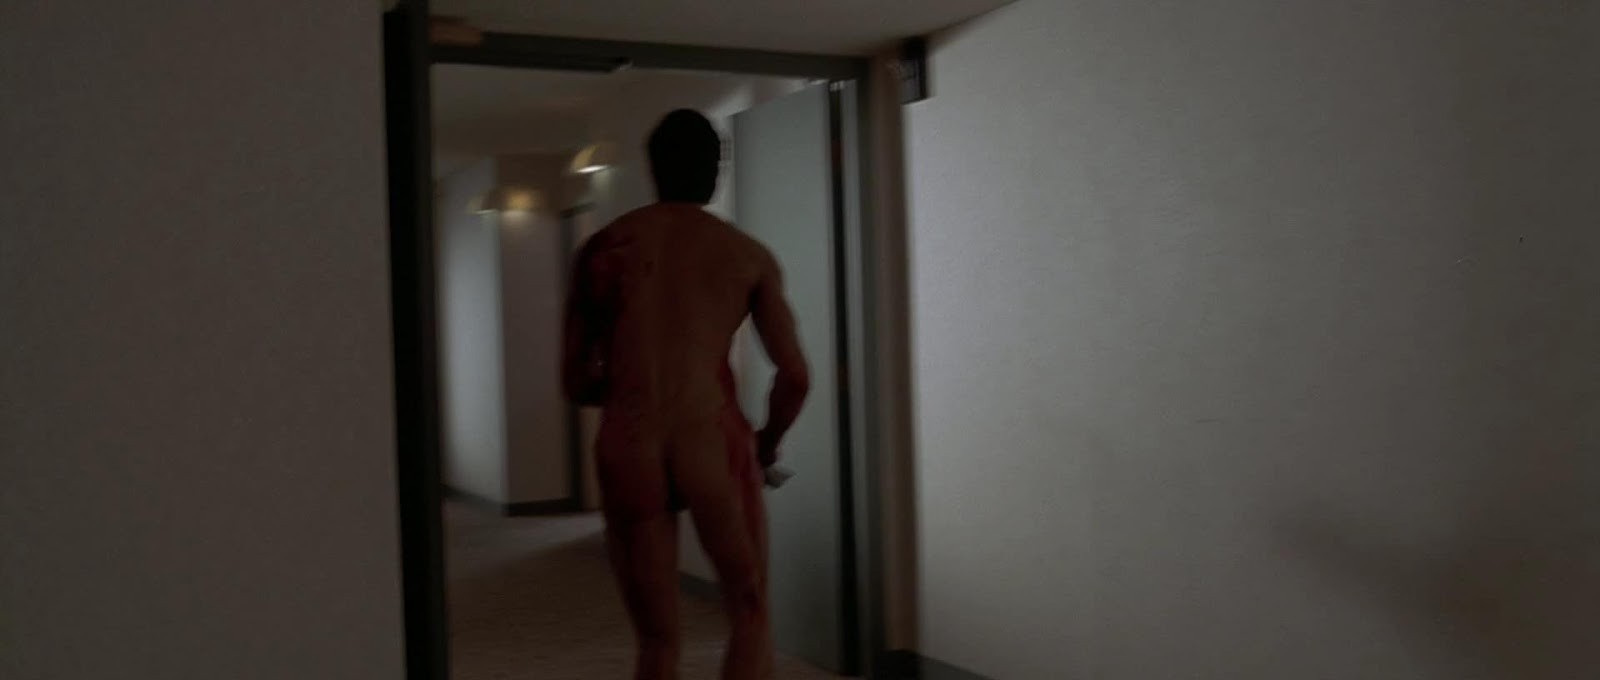 Christian Bale nudo in "American Psycho" (2000) .